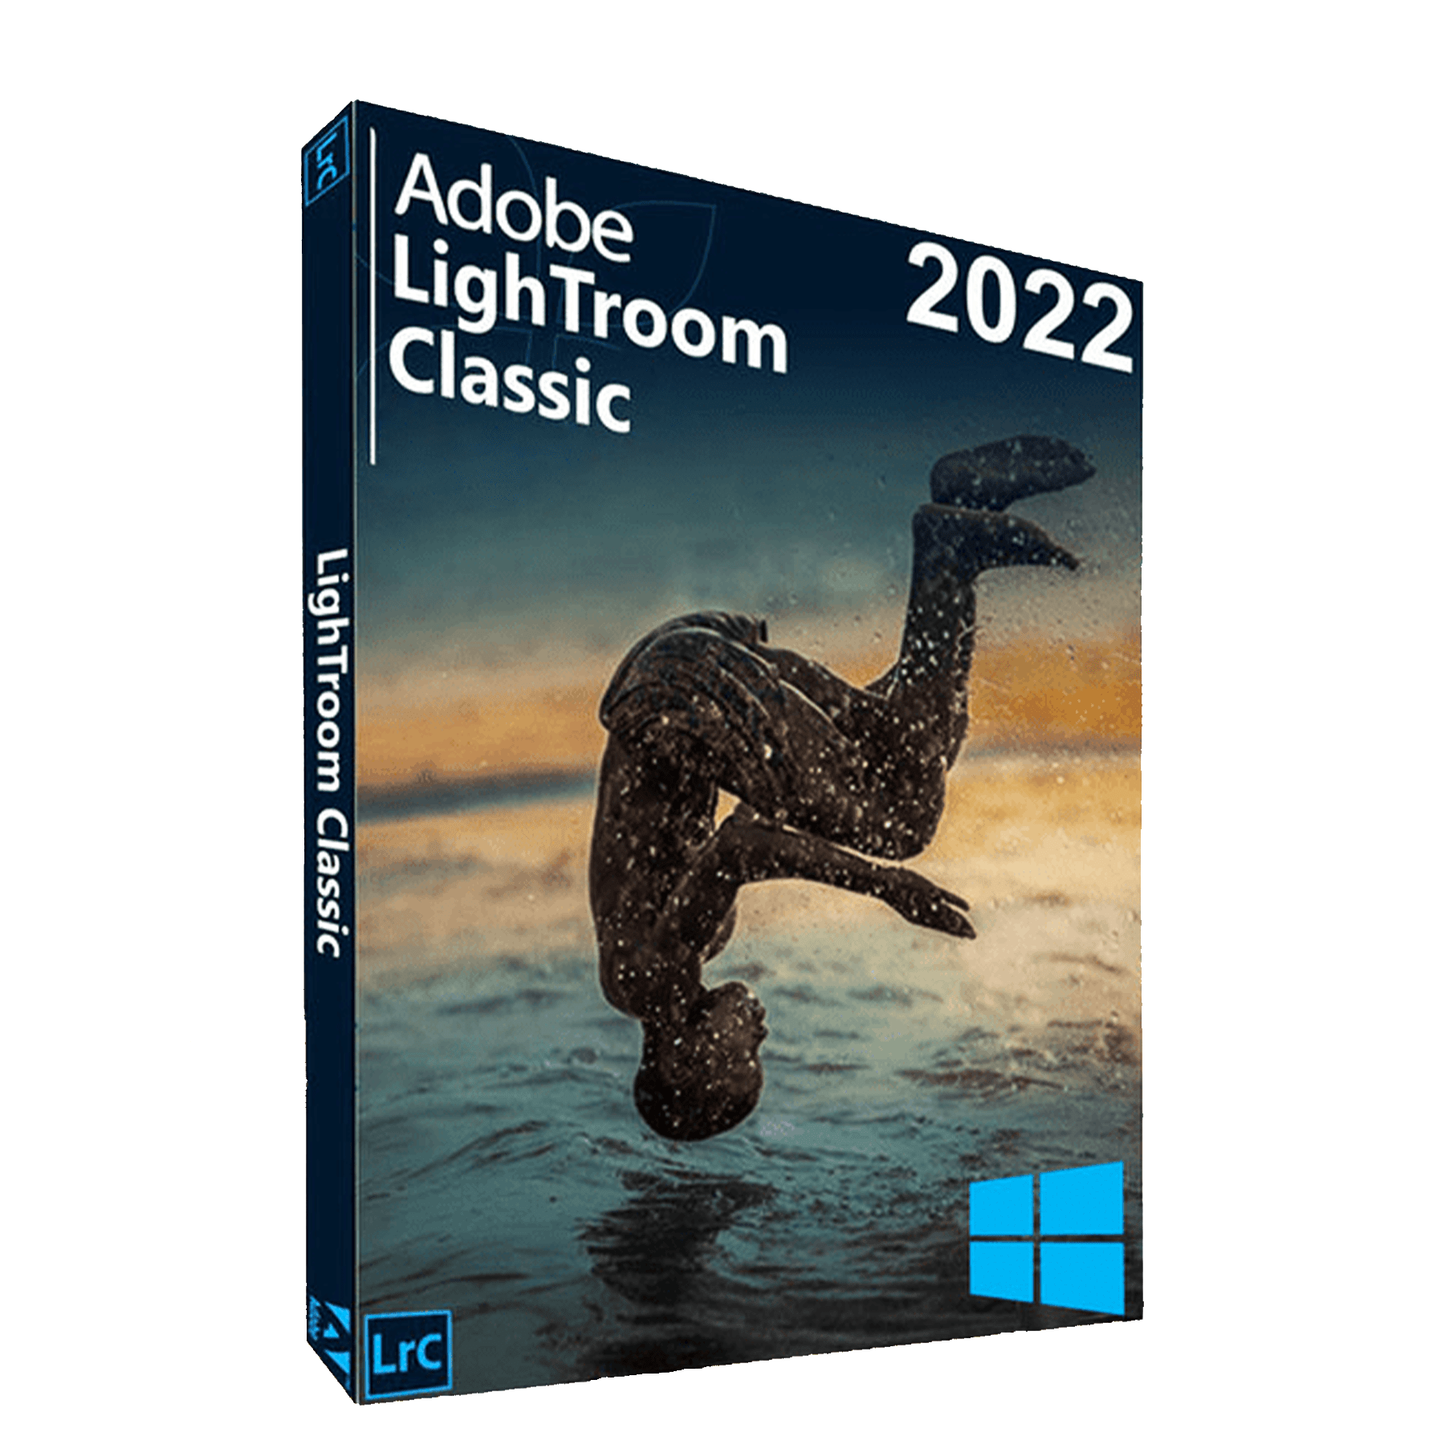 Adobe Lightroom Classic 2022 Lifetime License - Full Version